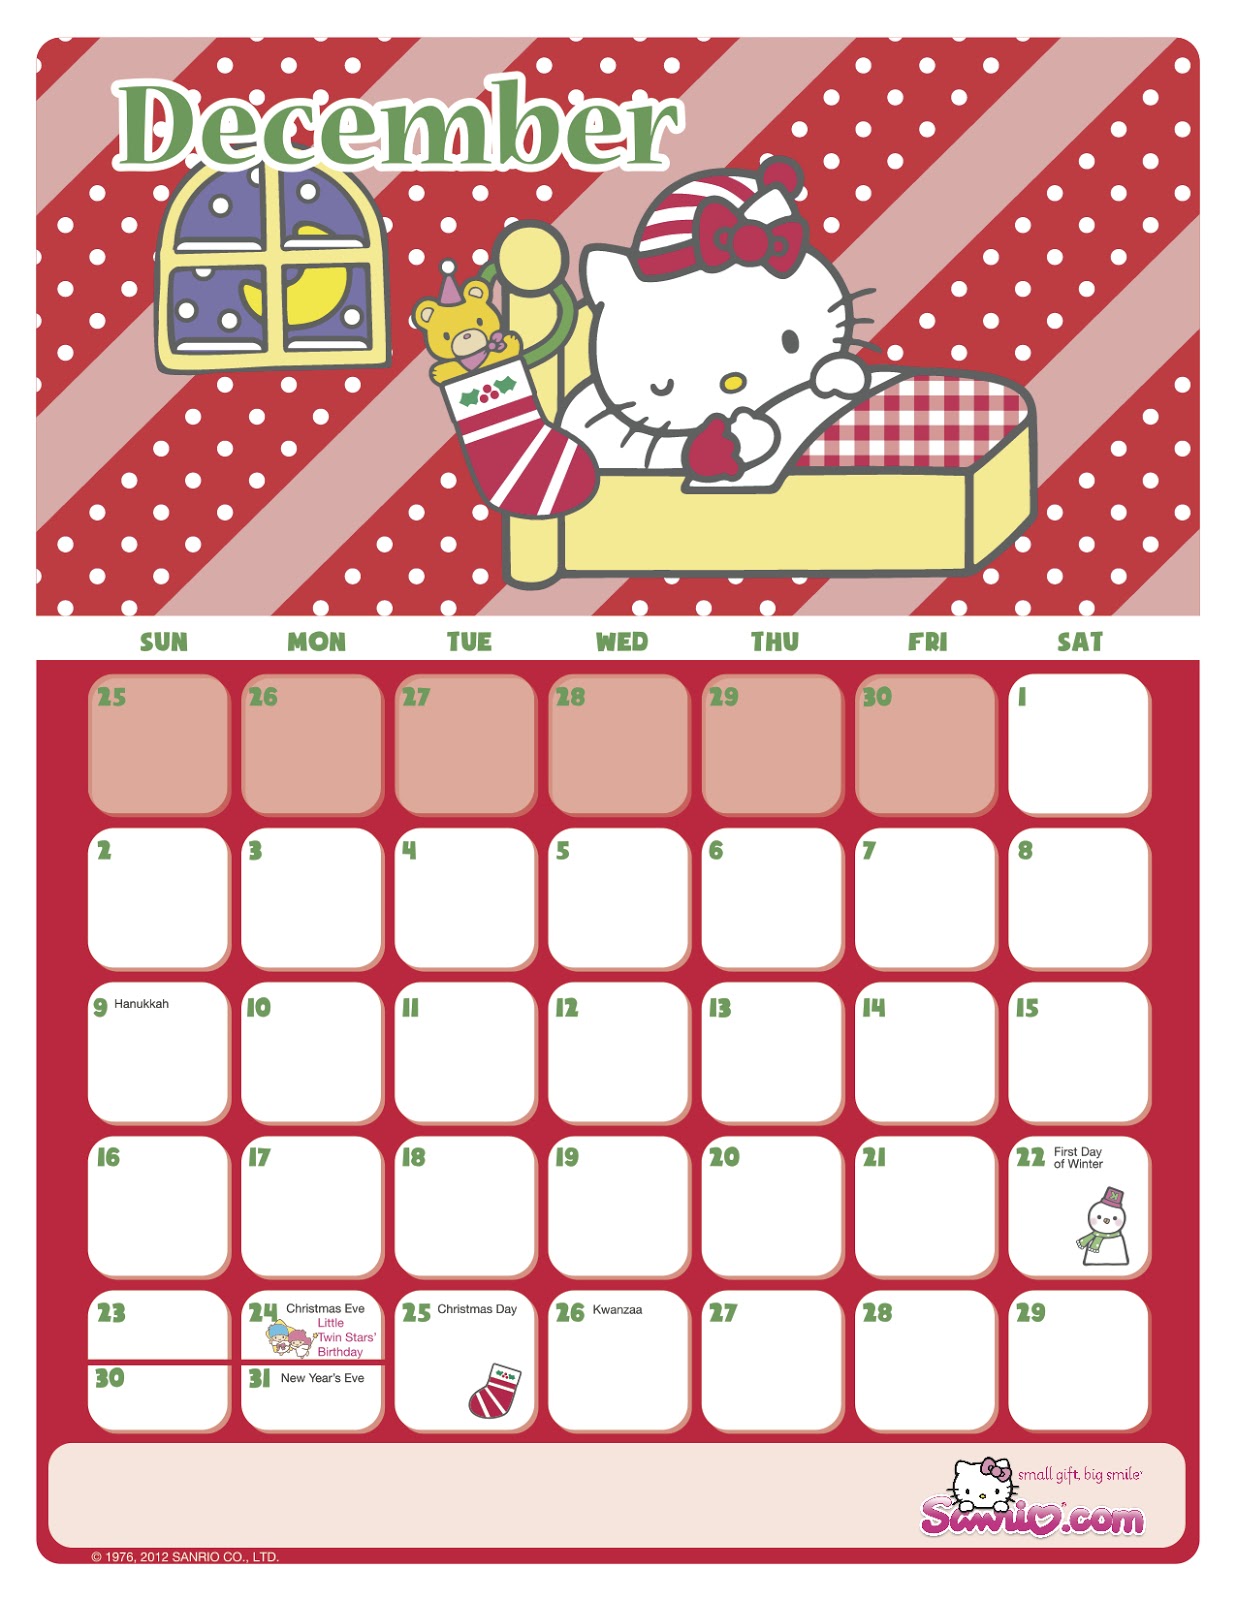 I love Kawaii Hello Kitty 2012 December Calendar